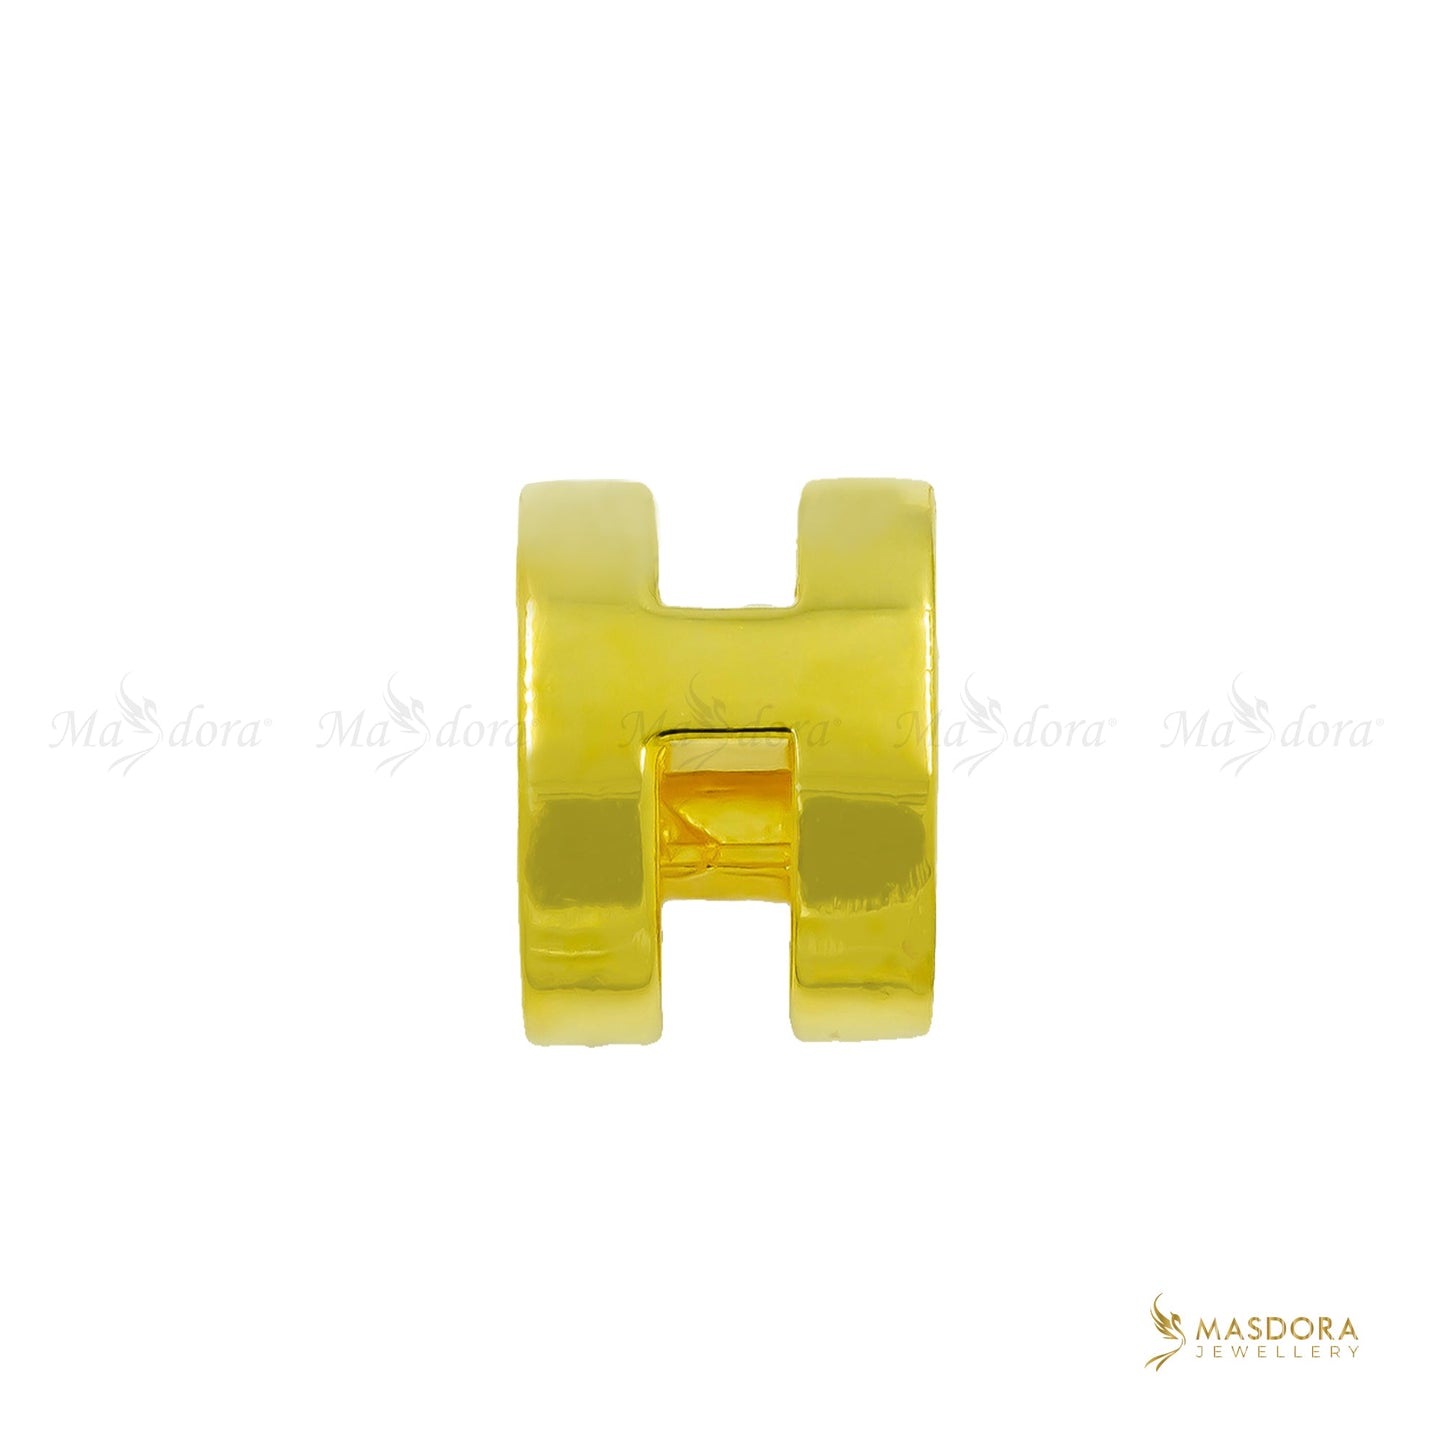 Golden H Pendant (Emas 916)